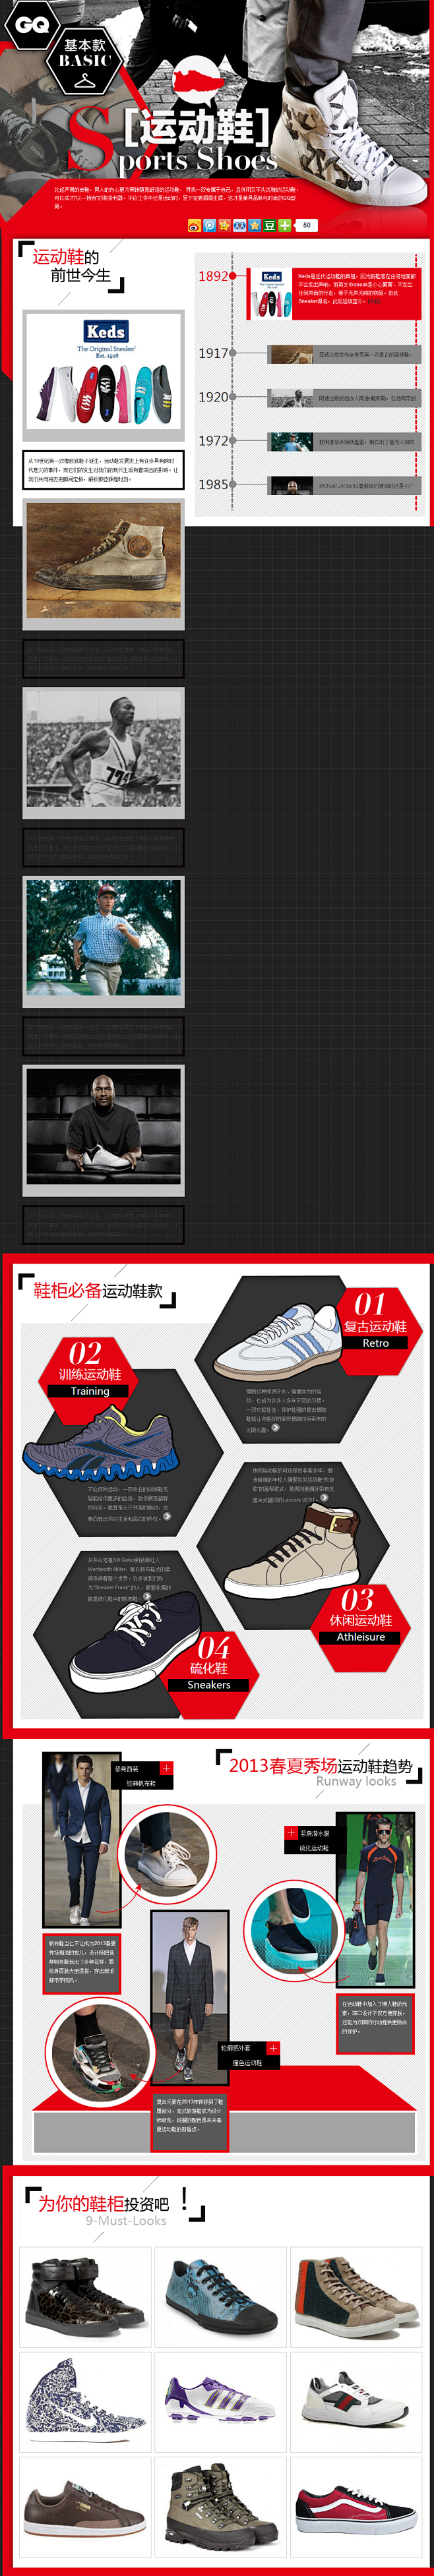 GQ基本款：运动鞋Sports Shoe...